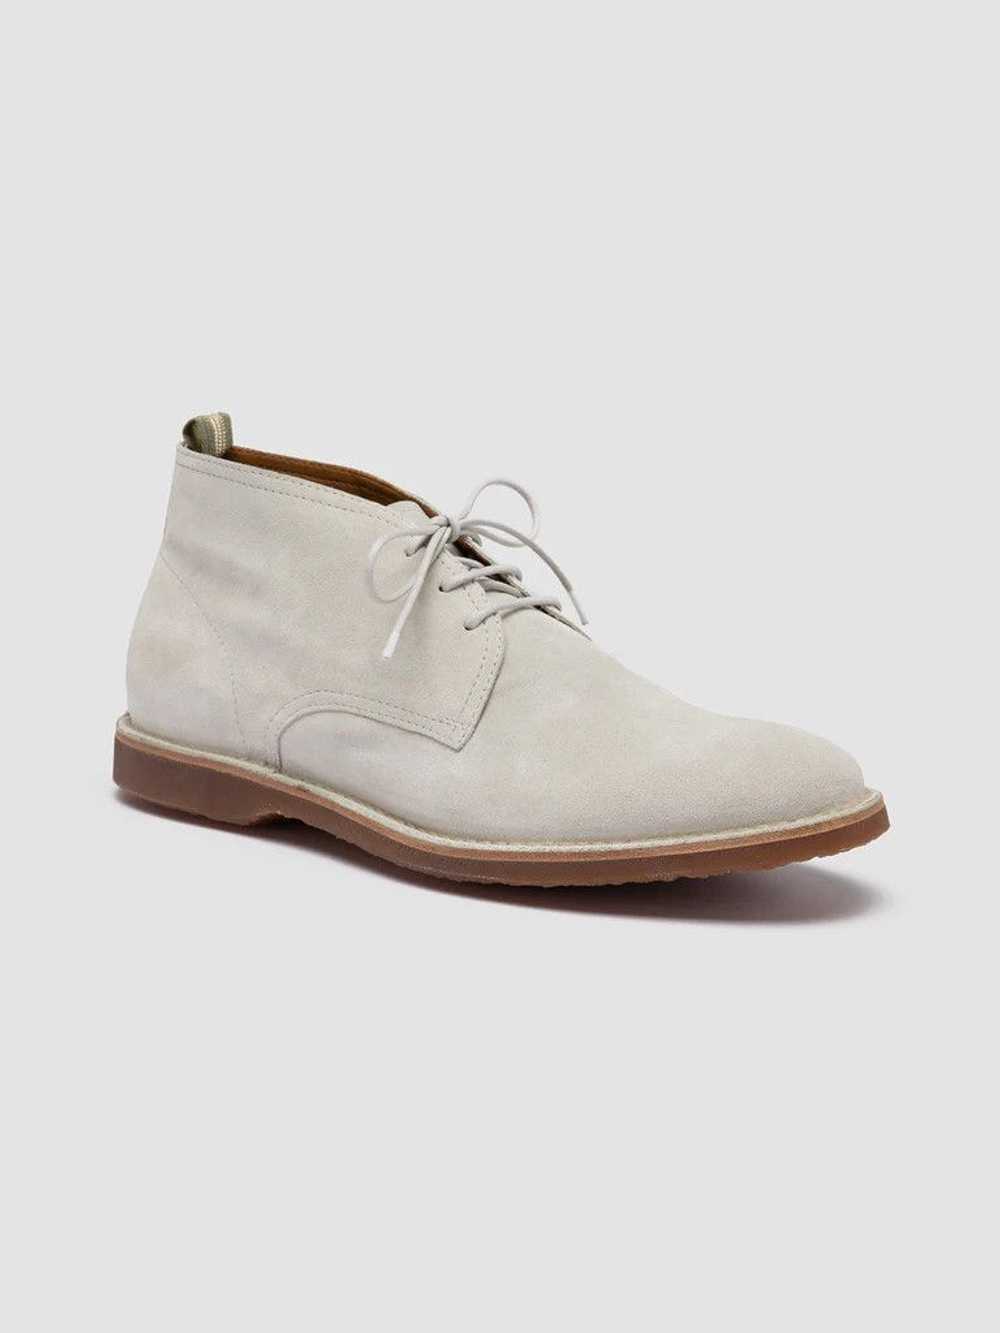 Brunello Cucinelli o1w1db10524 Shoes in White - image 3